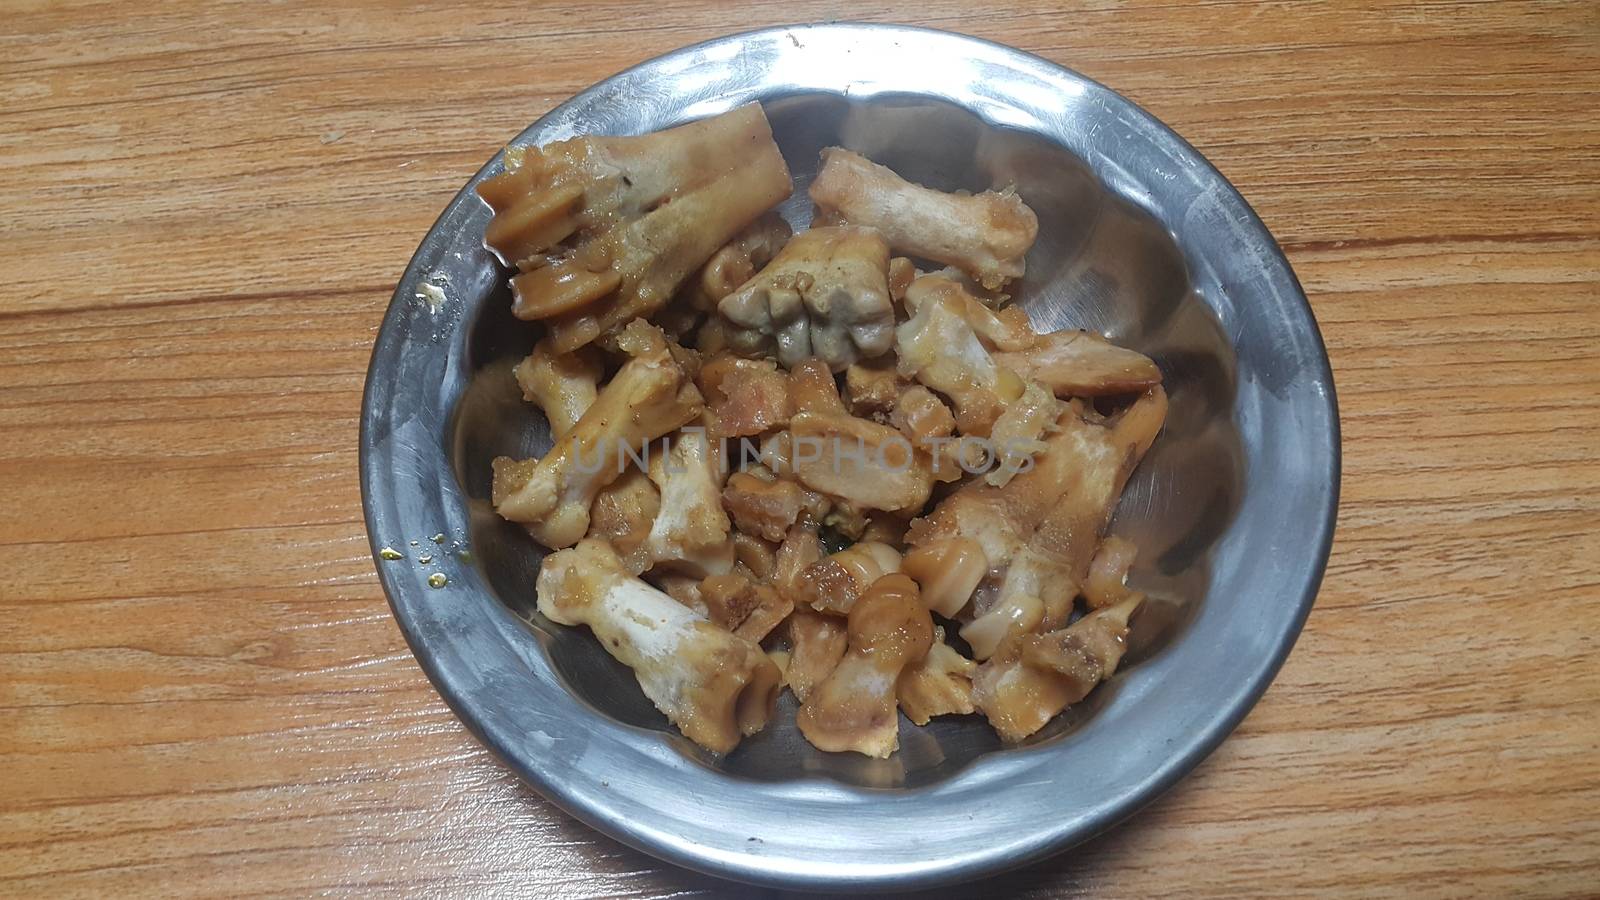 Bones left from siri paaye or paya dish. This dish is popular in Pakistan and Bangladesh